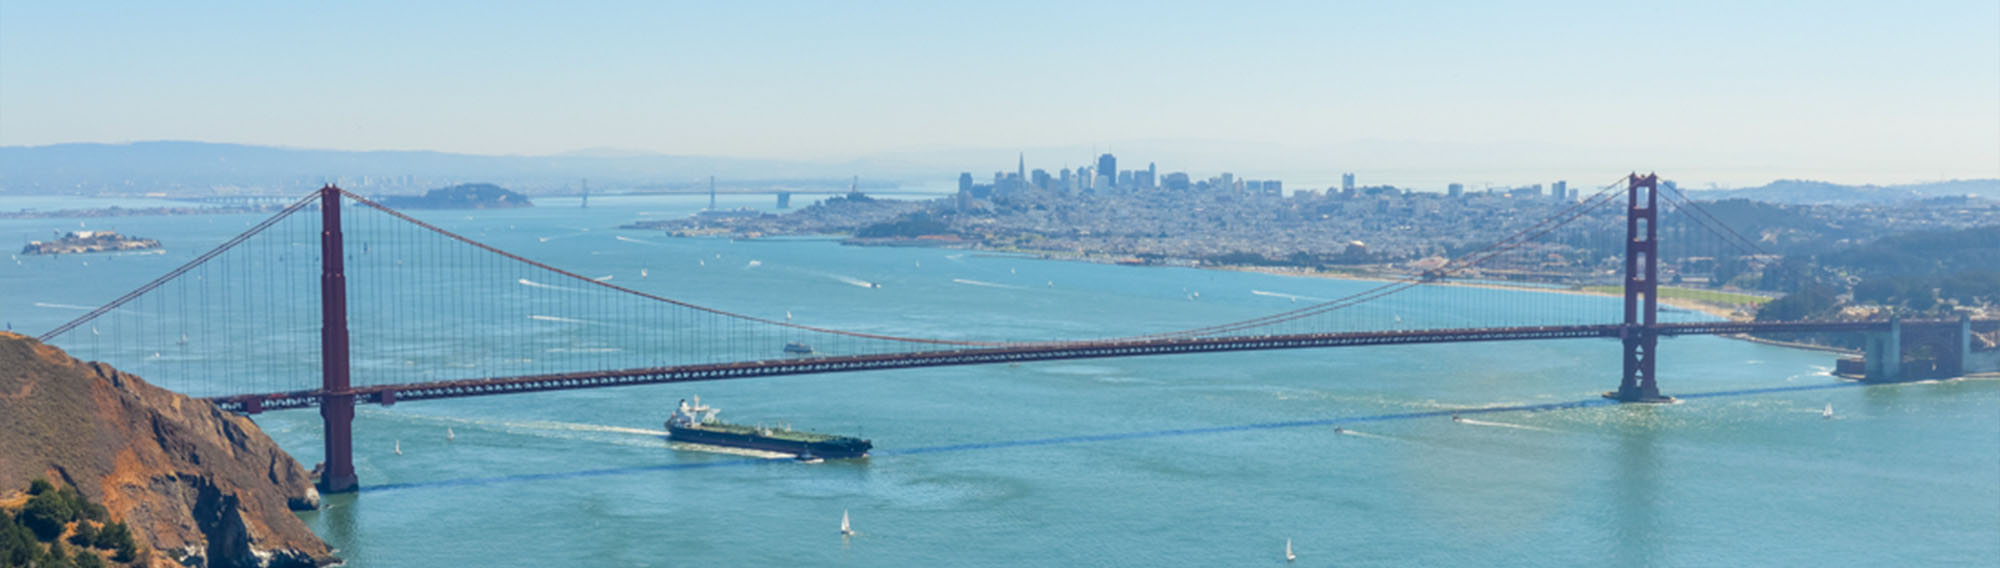 A view of a bridge in San Francisco, California.